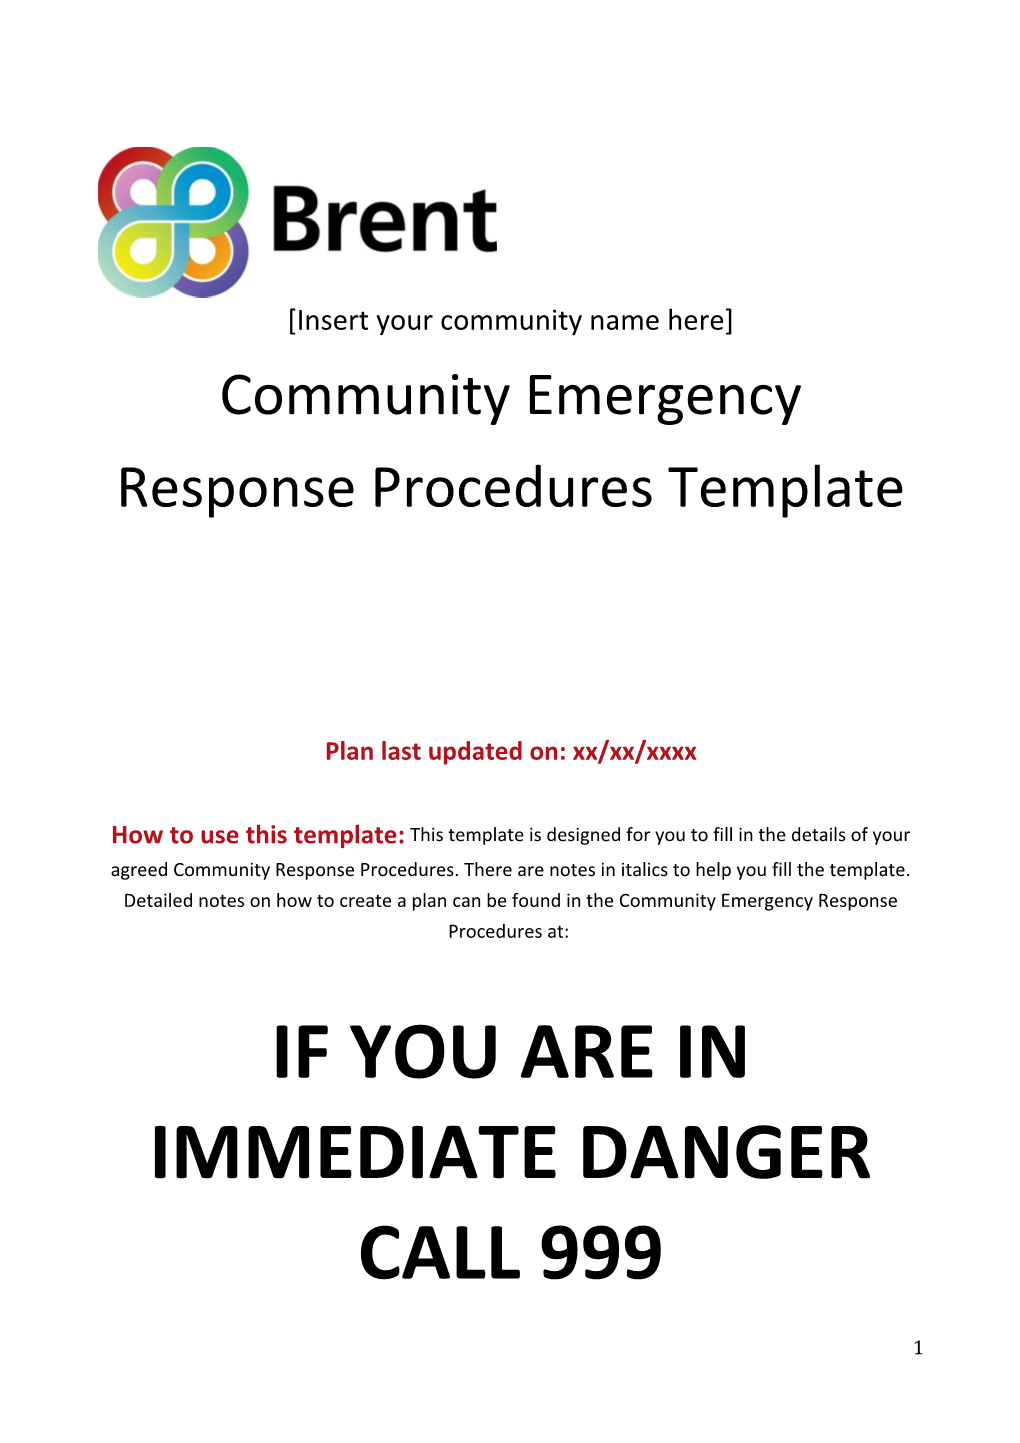 Brent Community Response Procedures 2014